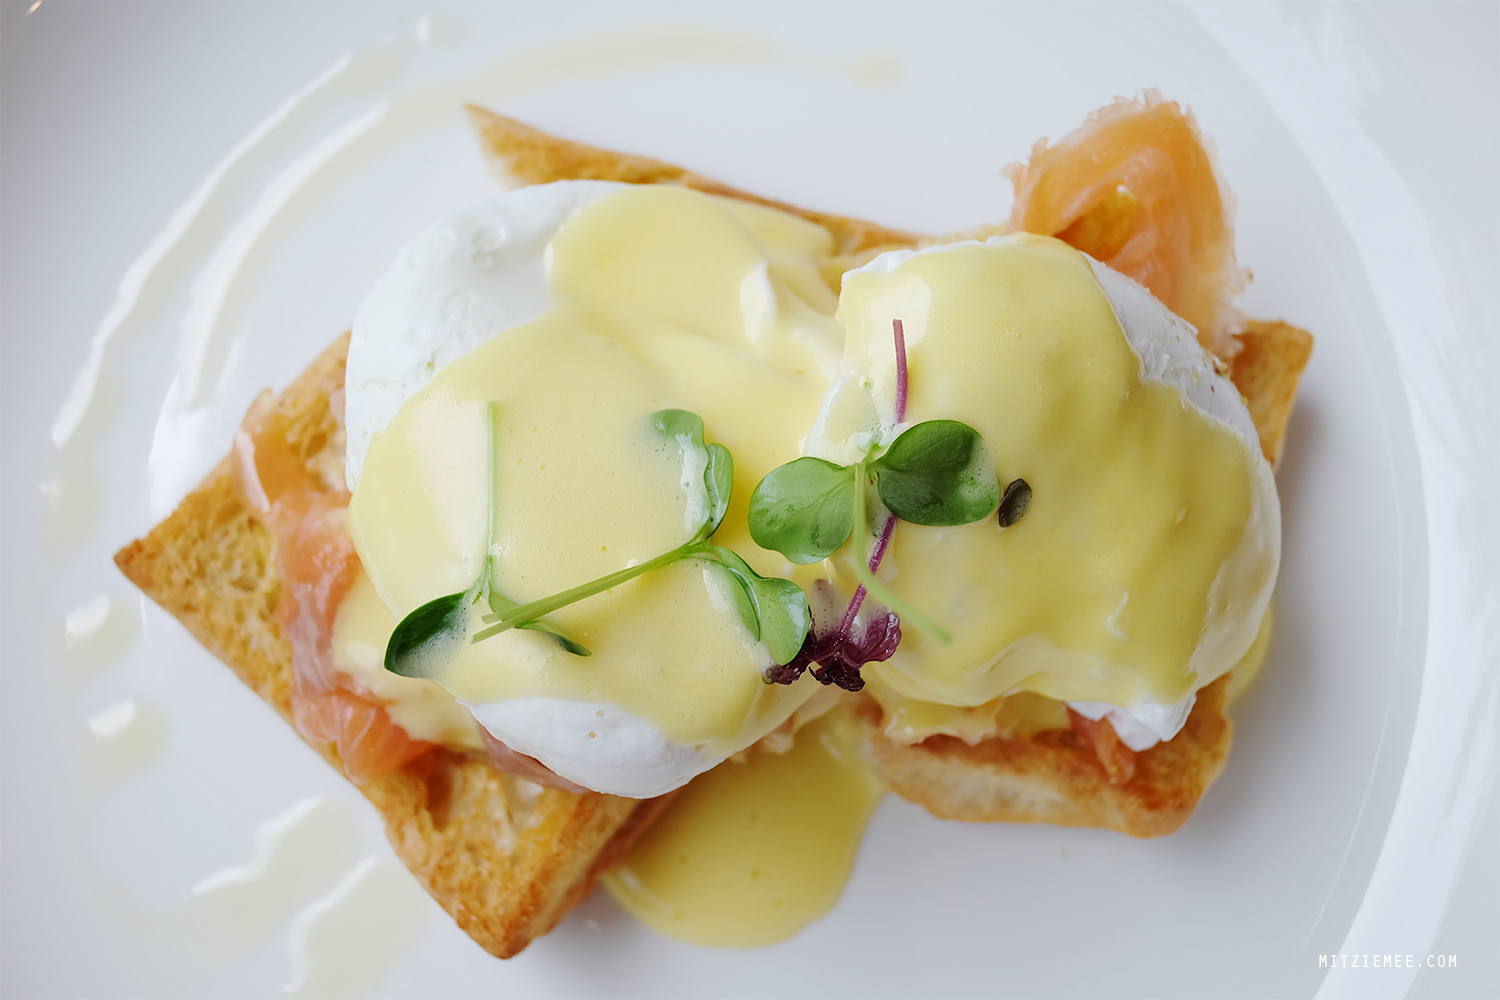 Eggs Benedict with salmon at The Coffee Club Dubai